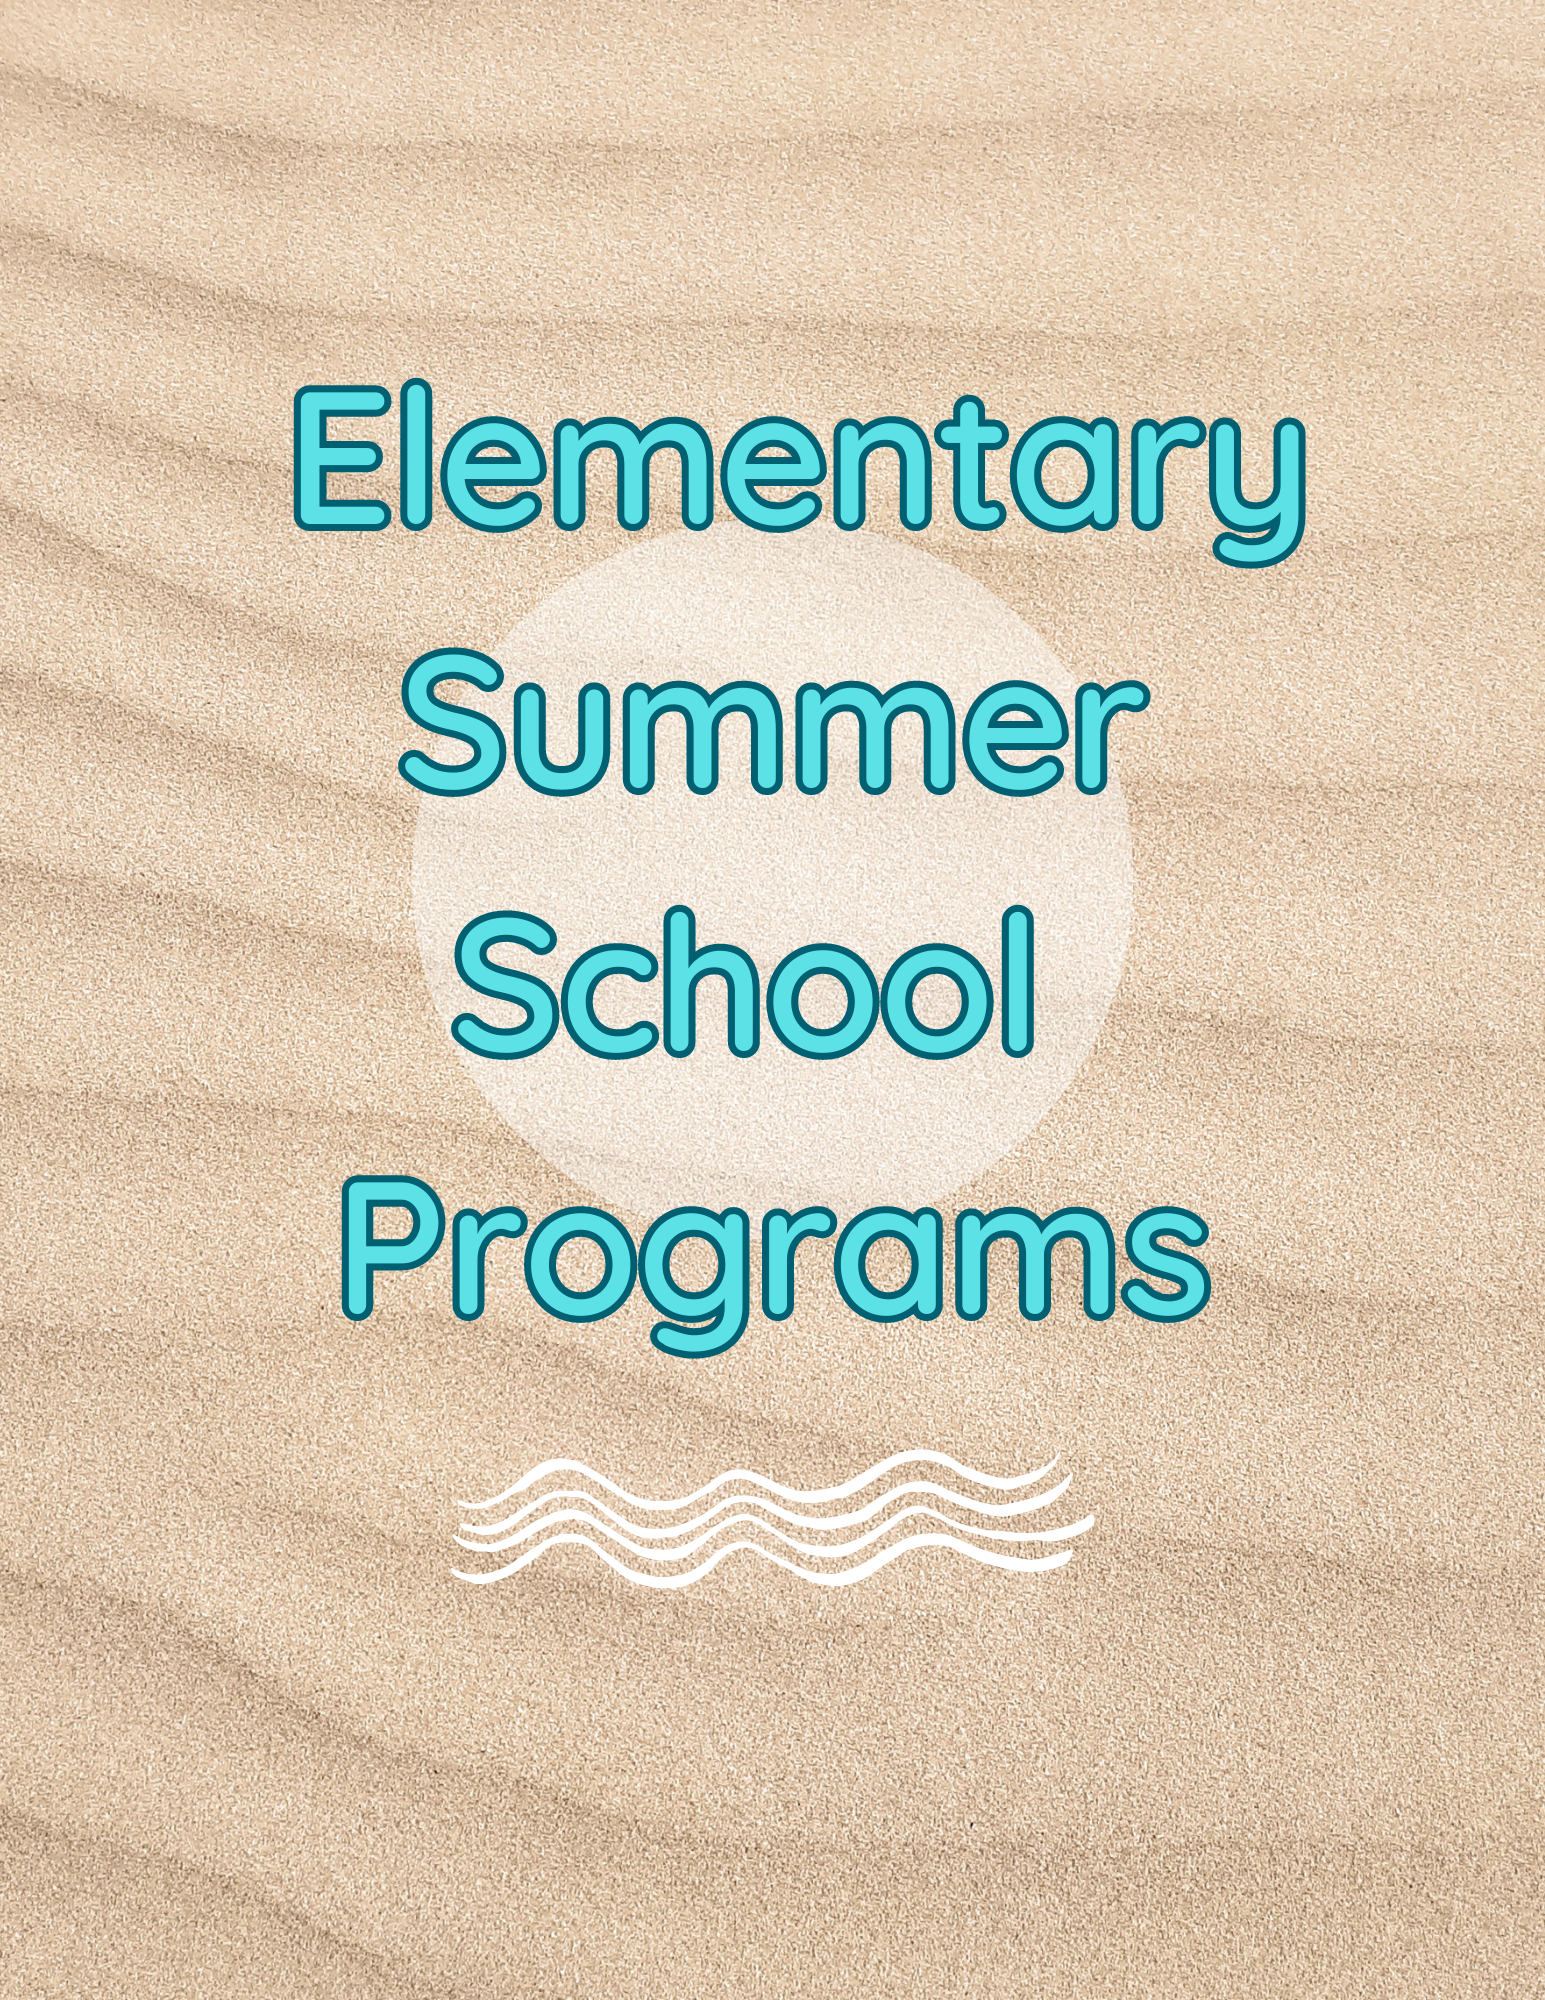 Elementary Summer School Programs